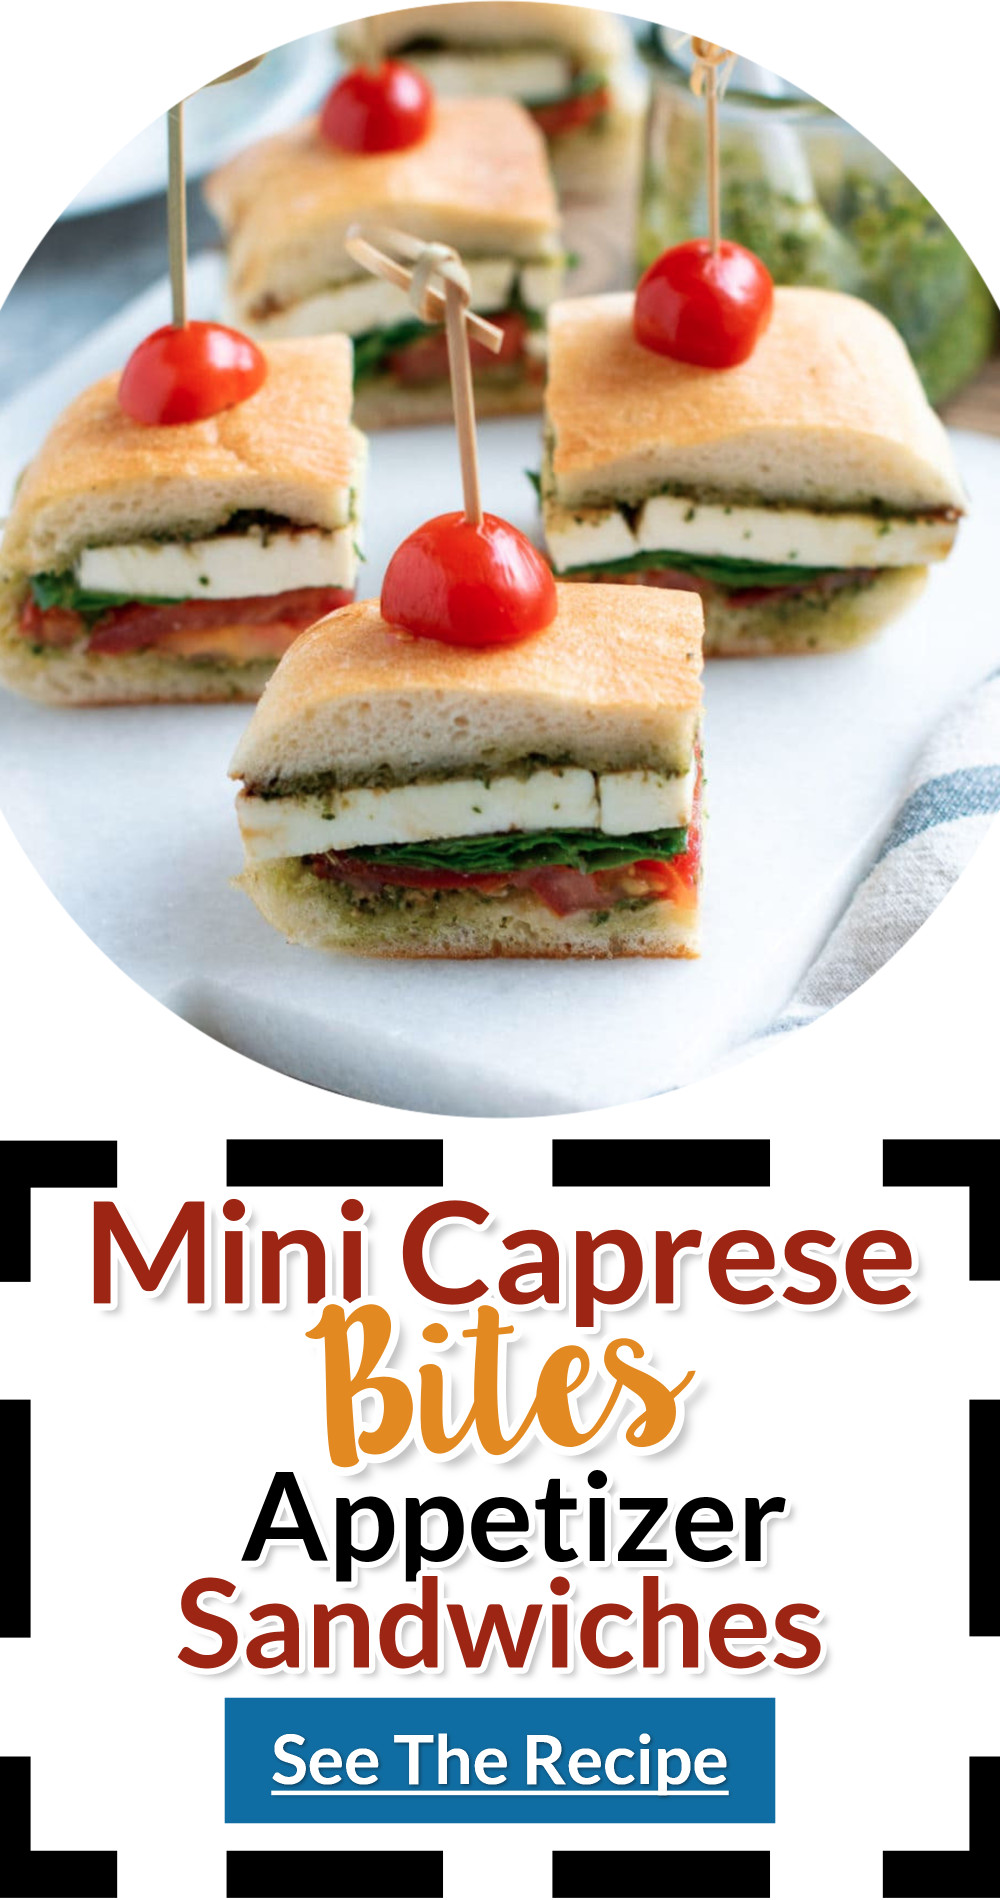 Mini Caprese Bites Appetizer Sandwiches Recipe